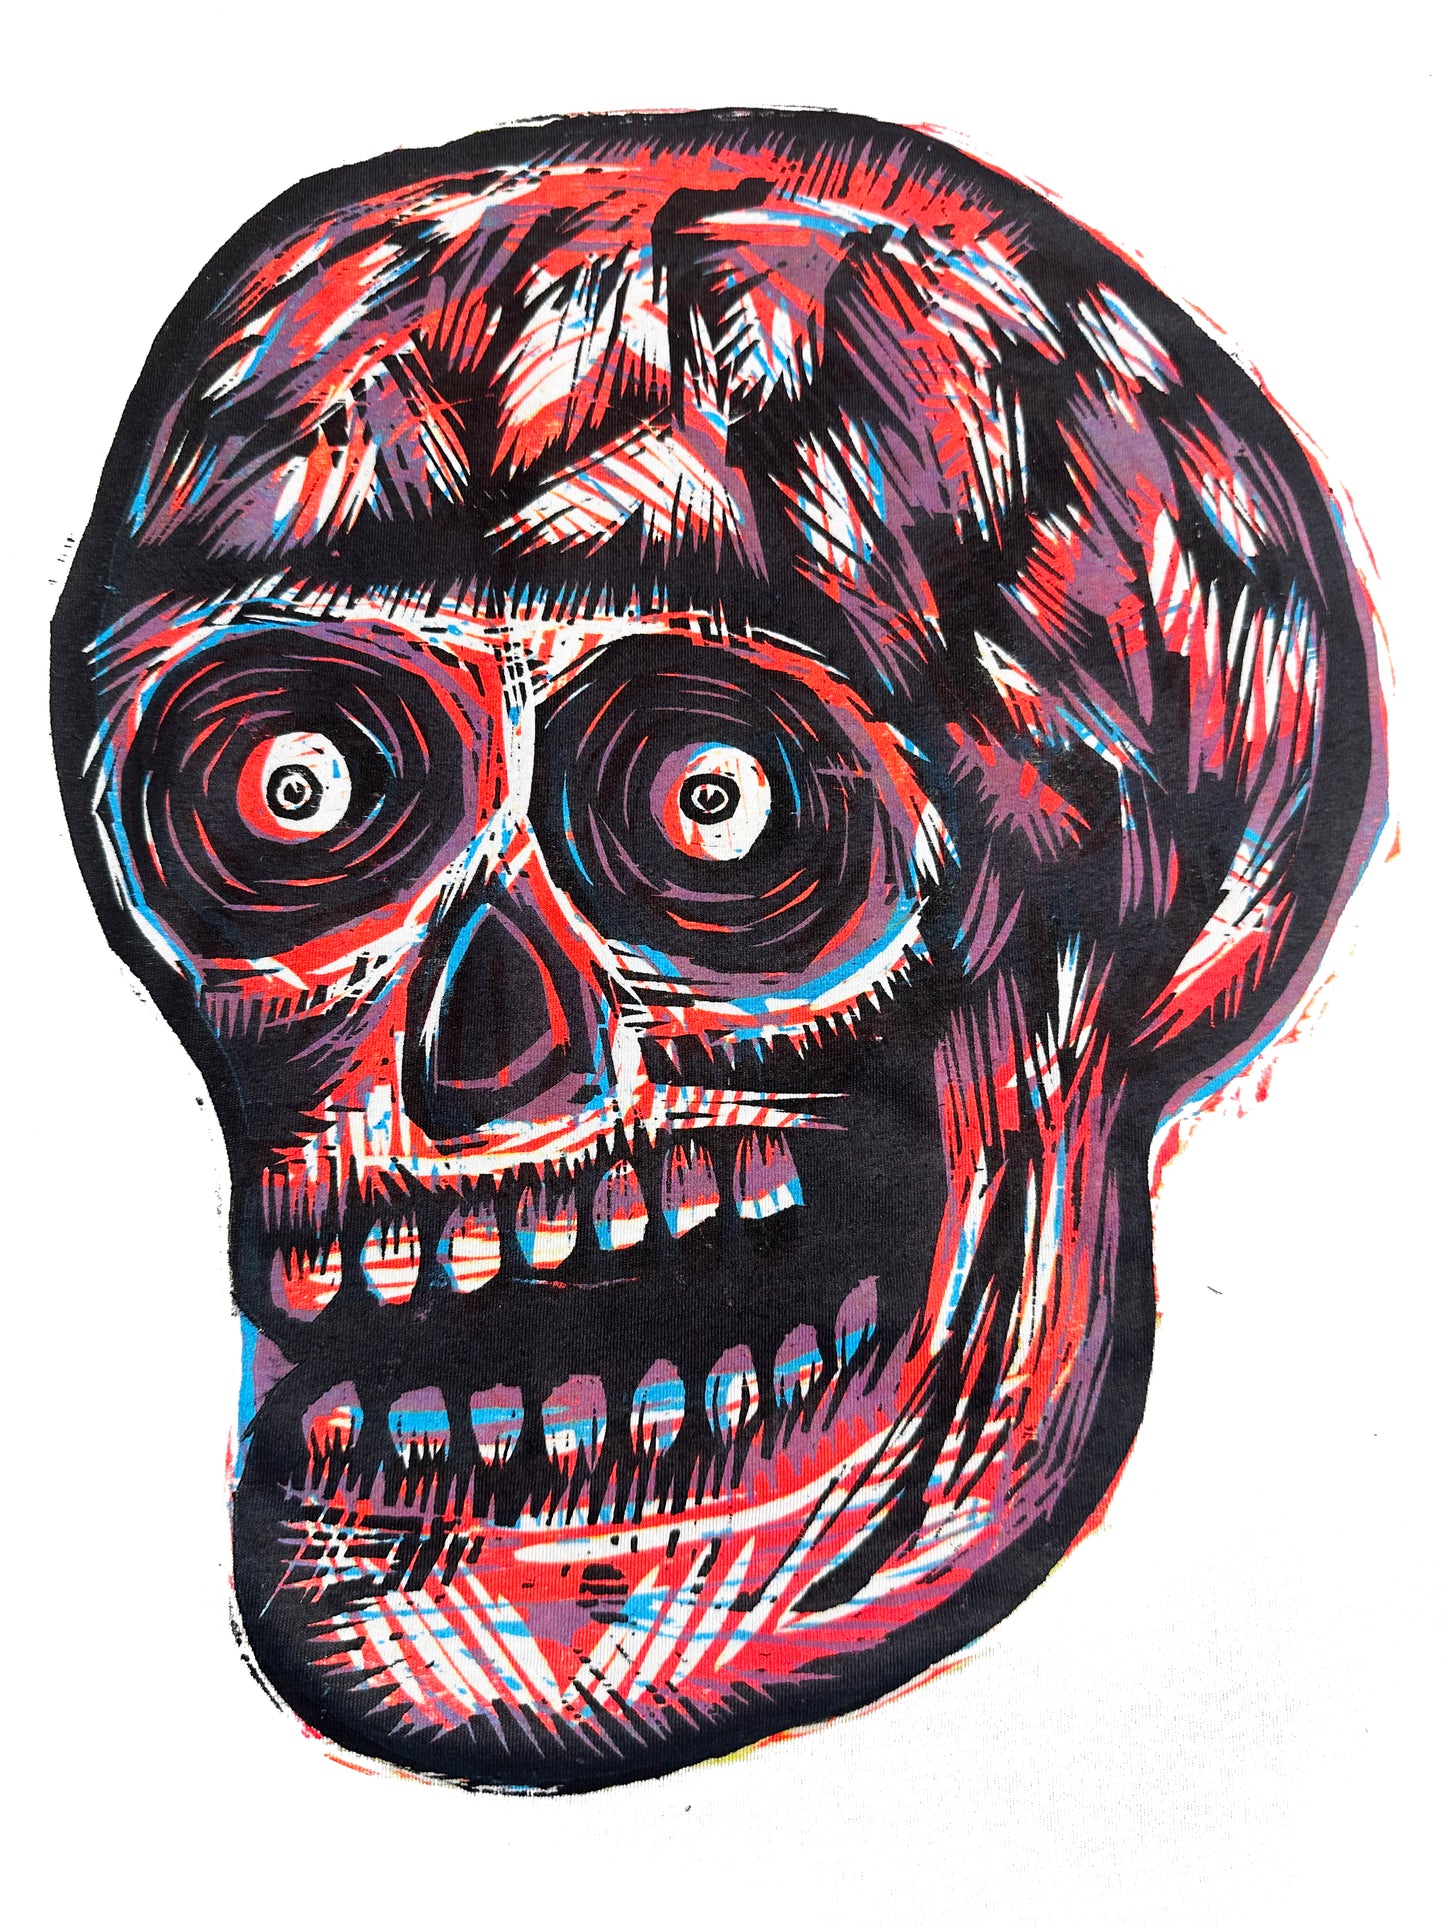 Skull Handprinted Color Woodcut T-Shirt